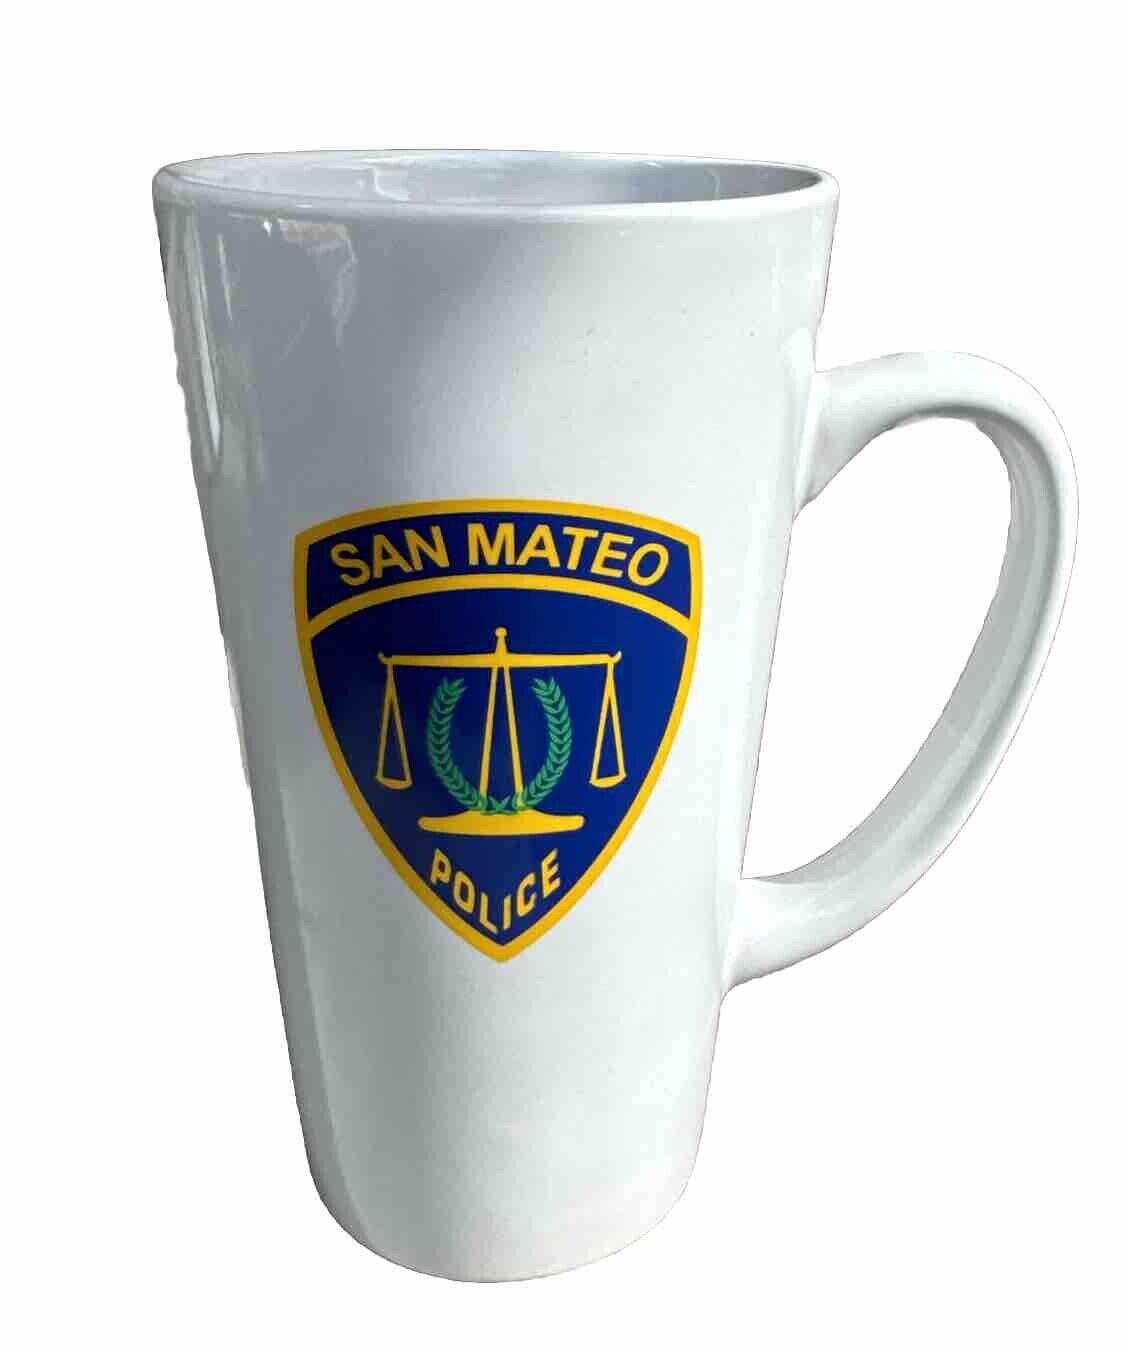 San Mateo Police Department￼ Police Mug Cup 16 ounce